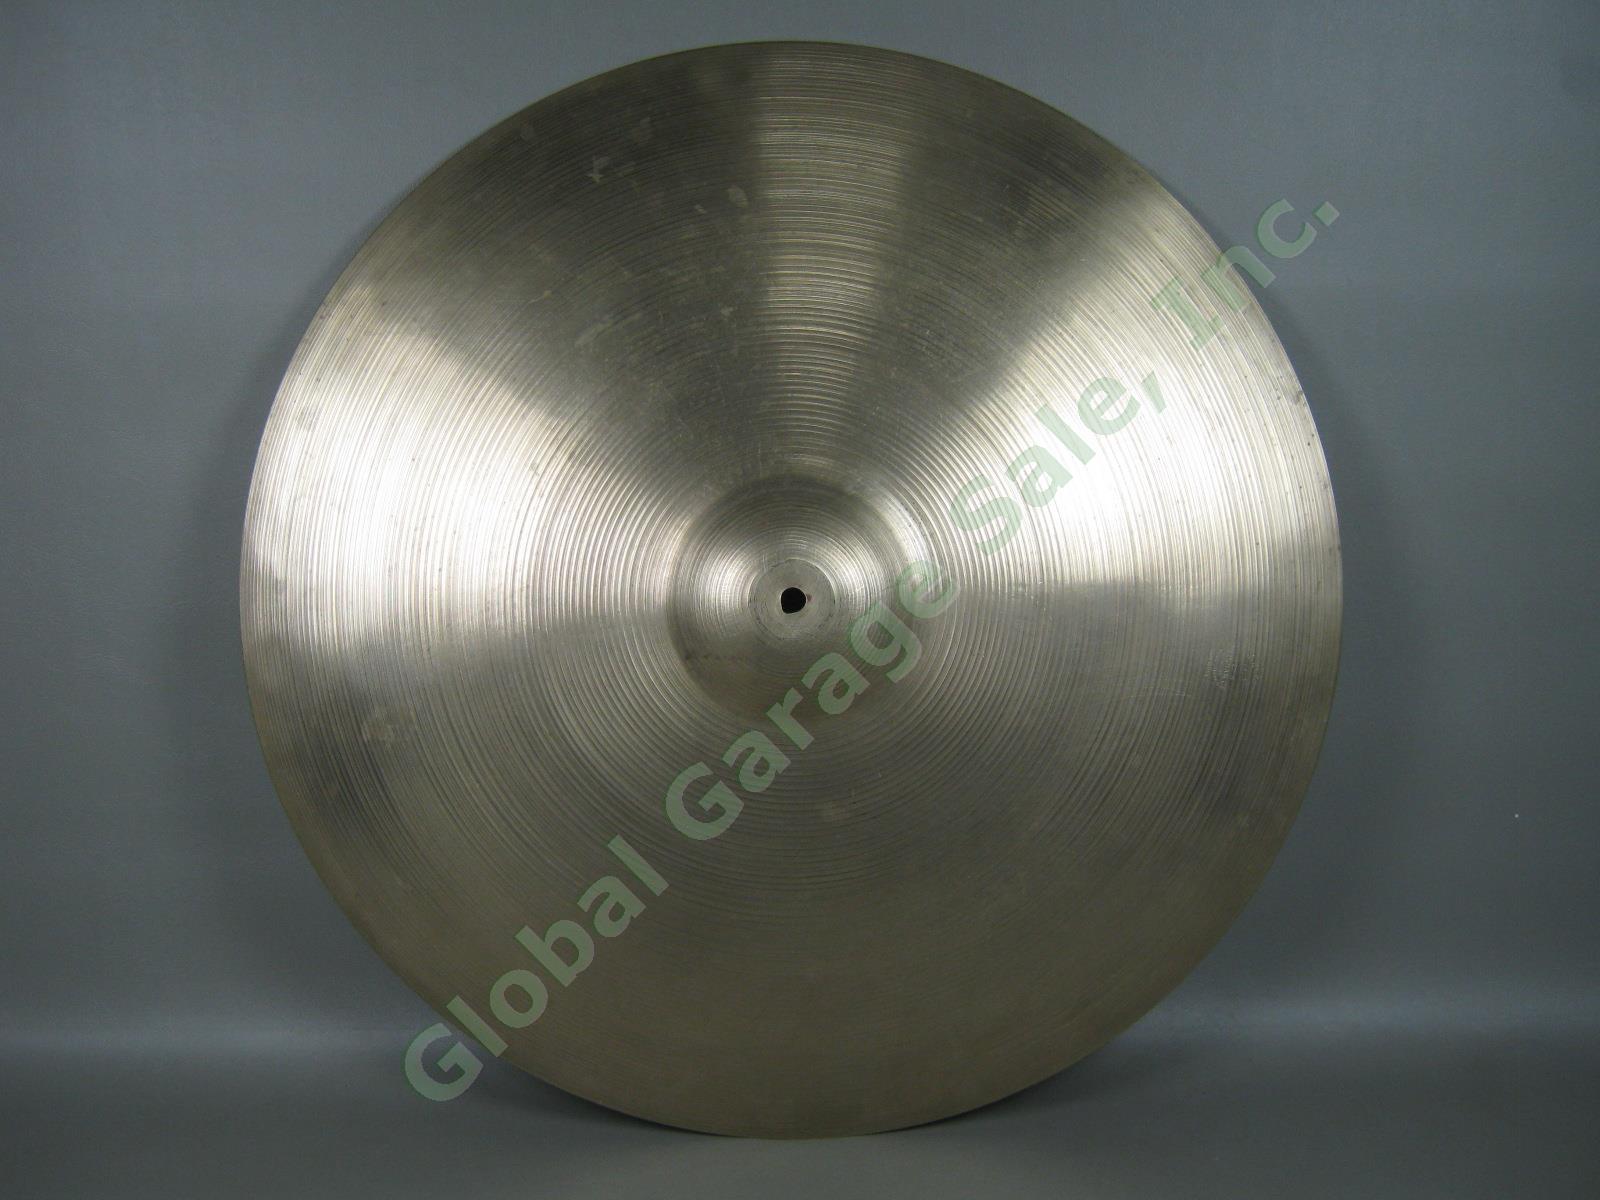 Vtg 24" Avedis Zildjian Co Genuine Turkish Ride Cymbal Made In USA 4535 Grams NR